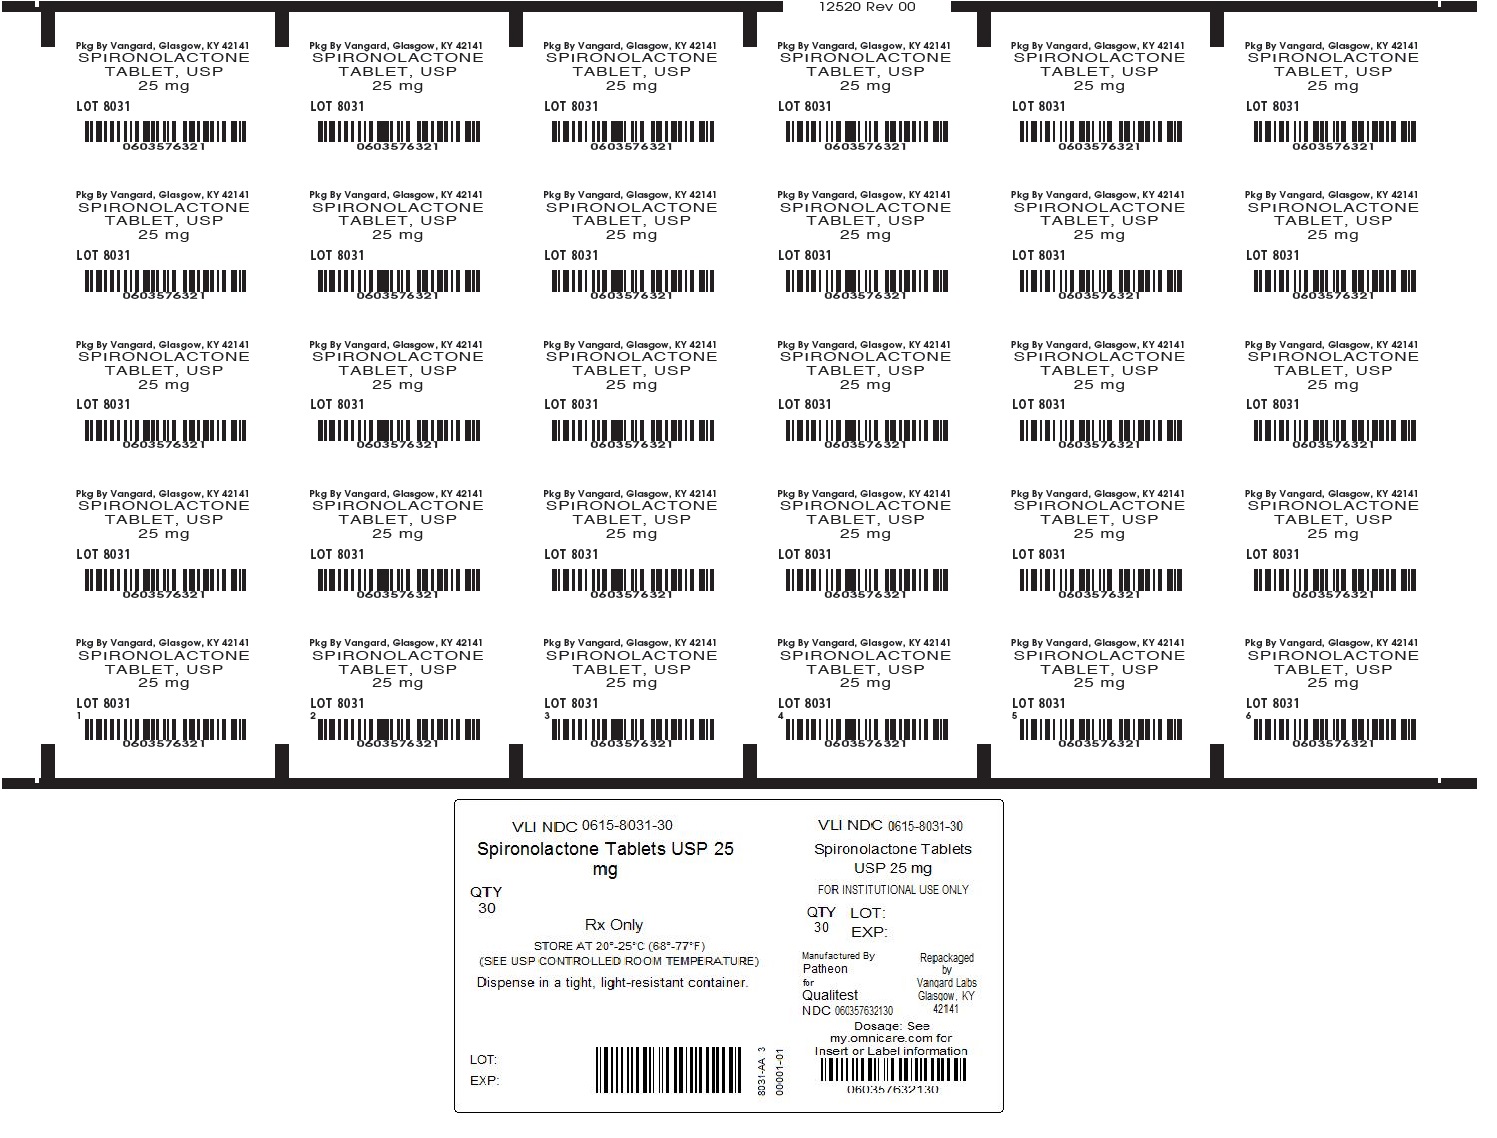 Spironolactone Tablets, USP 25mg unit-dose box label